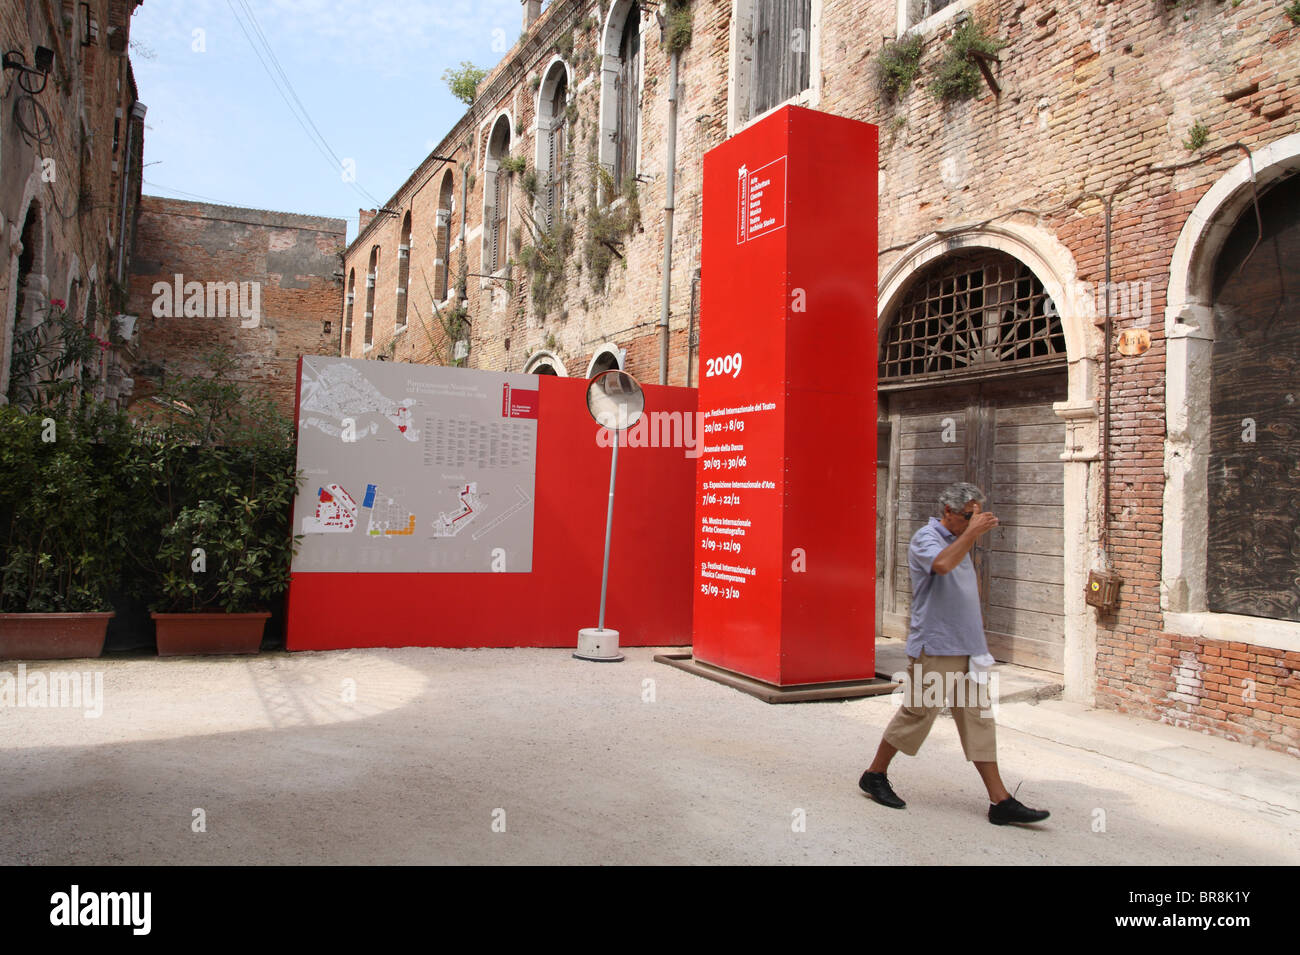 La Biennale di Venezia (Venecia Biennale) Foto de stock